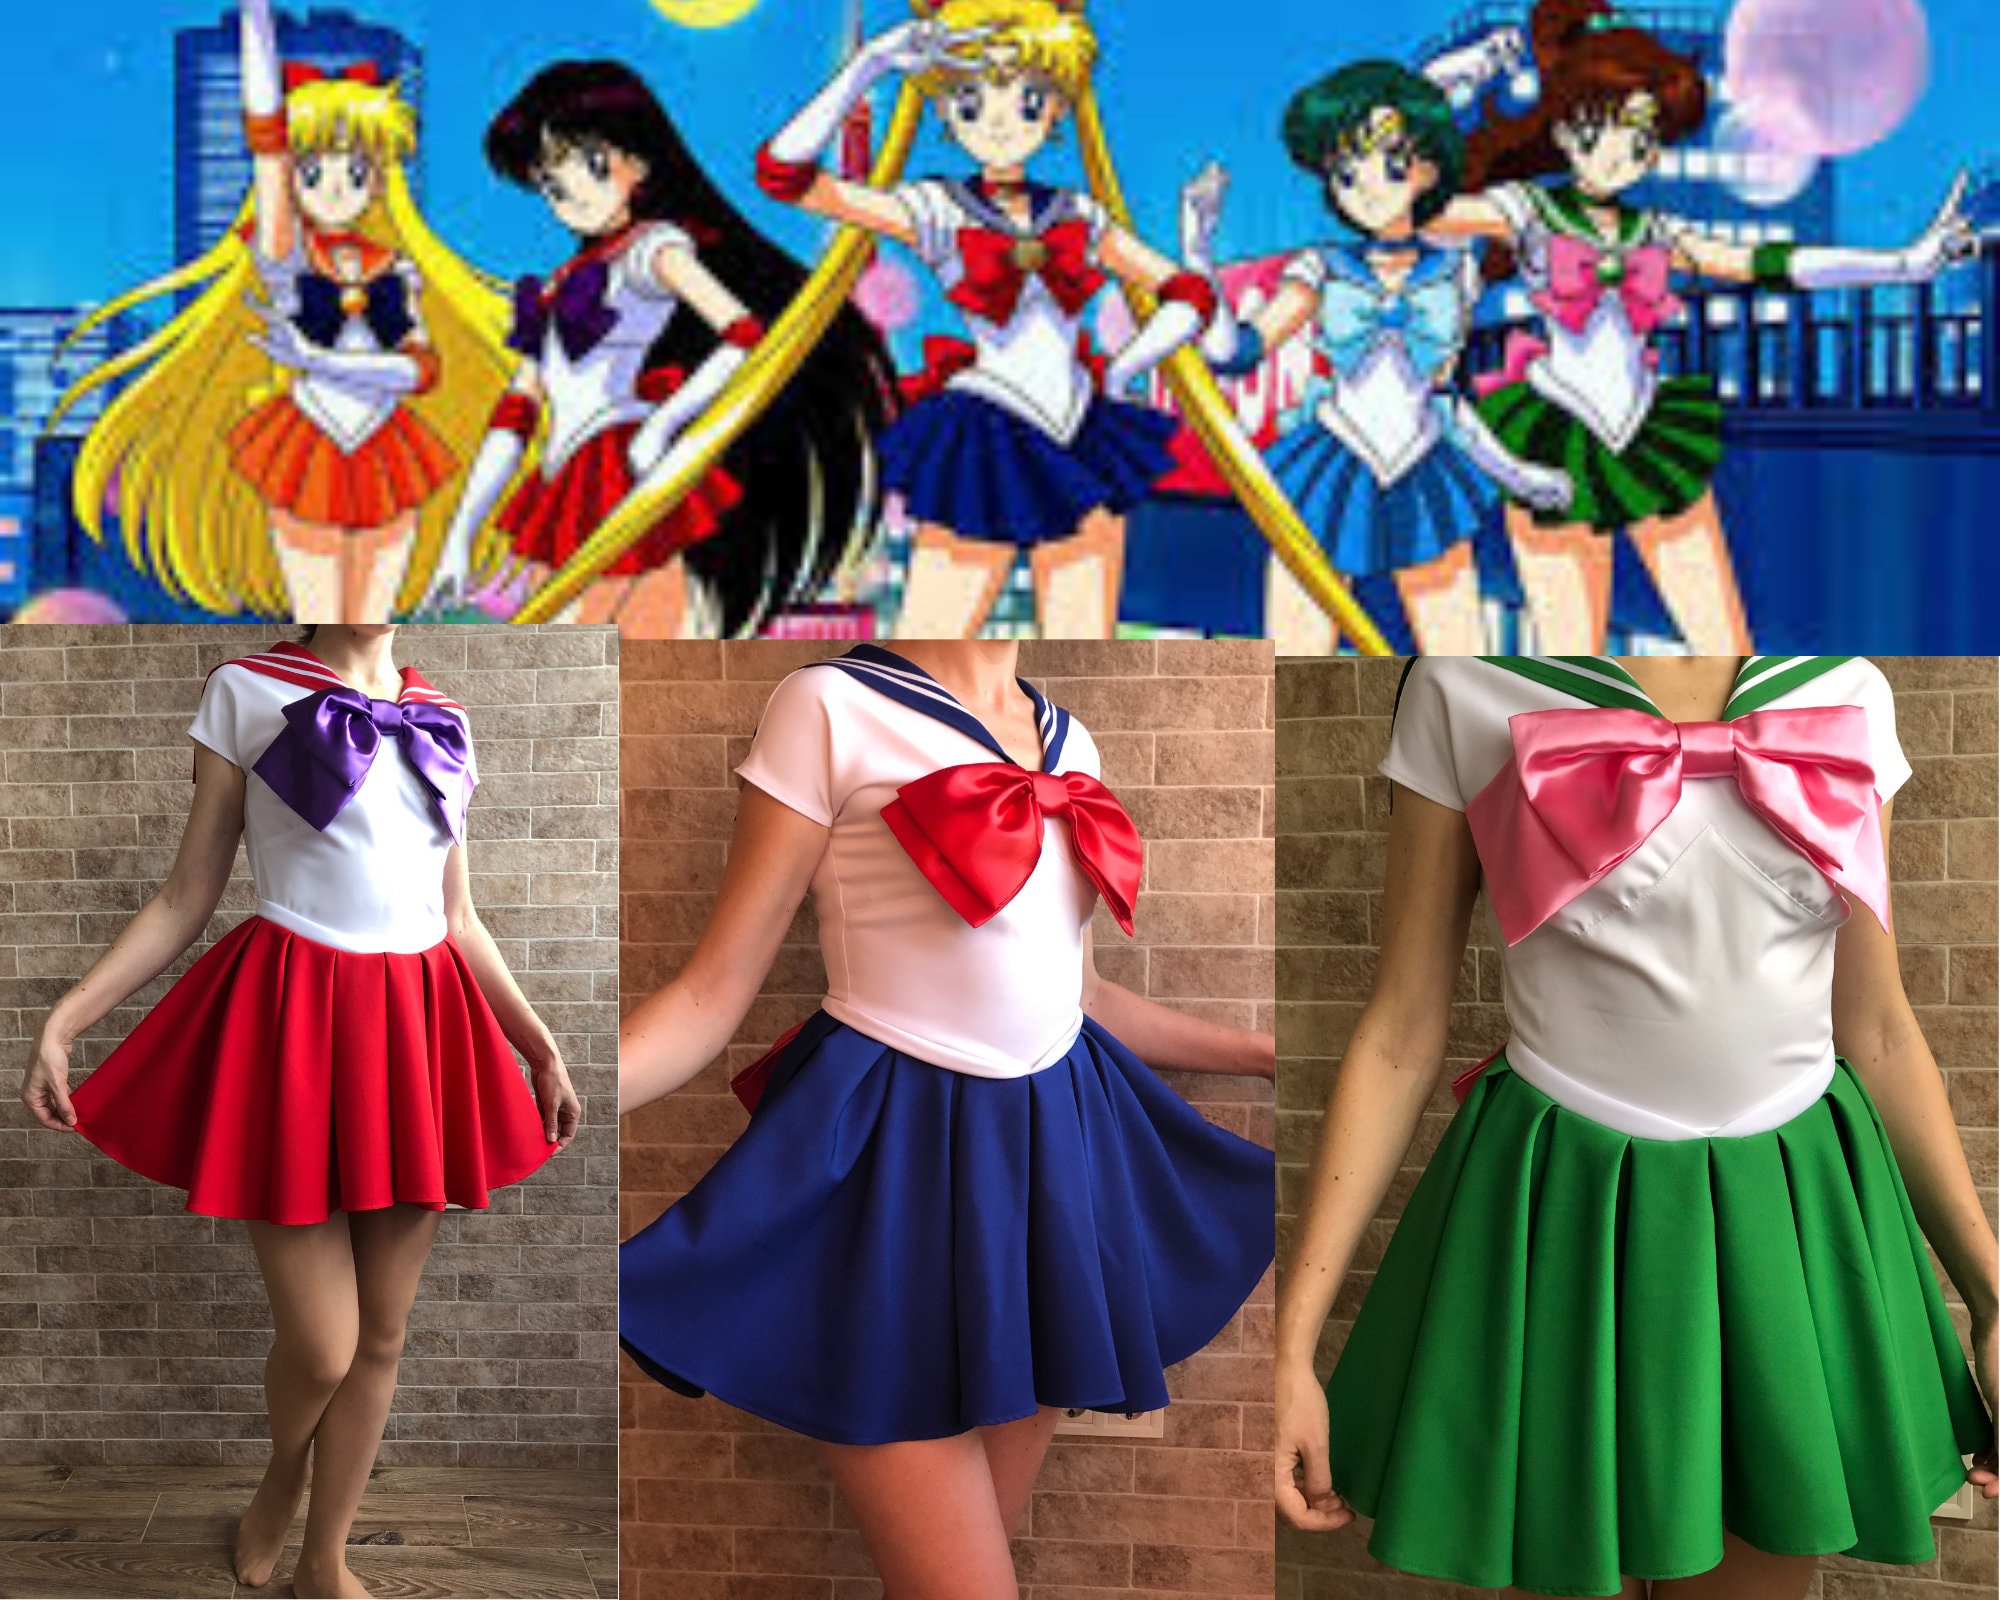 Sailor moon dress Sailor moon costume Sailor moon cosplay Halloween costume  donne Costumi per donne Cosplay costume per donne bambini adulti -   Italia